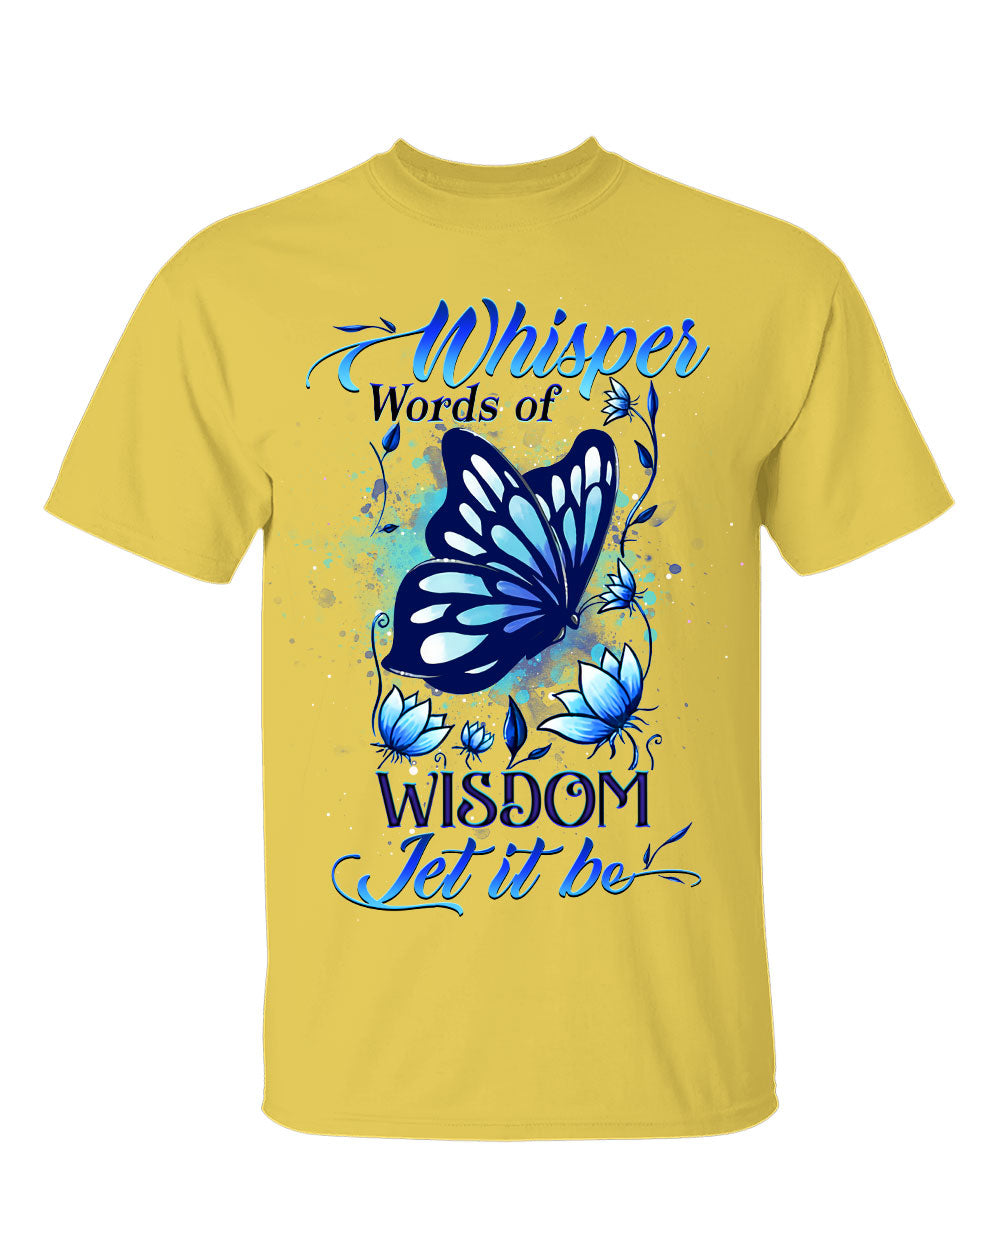 WHISPER WORDS OF WISDOM COTTON SHIRT - YHDU1905232